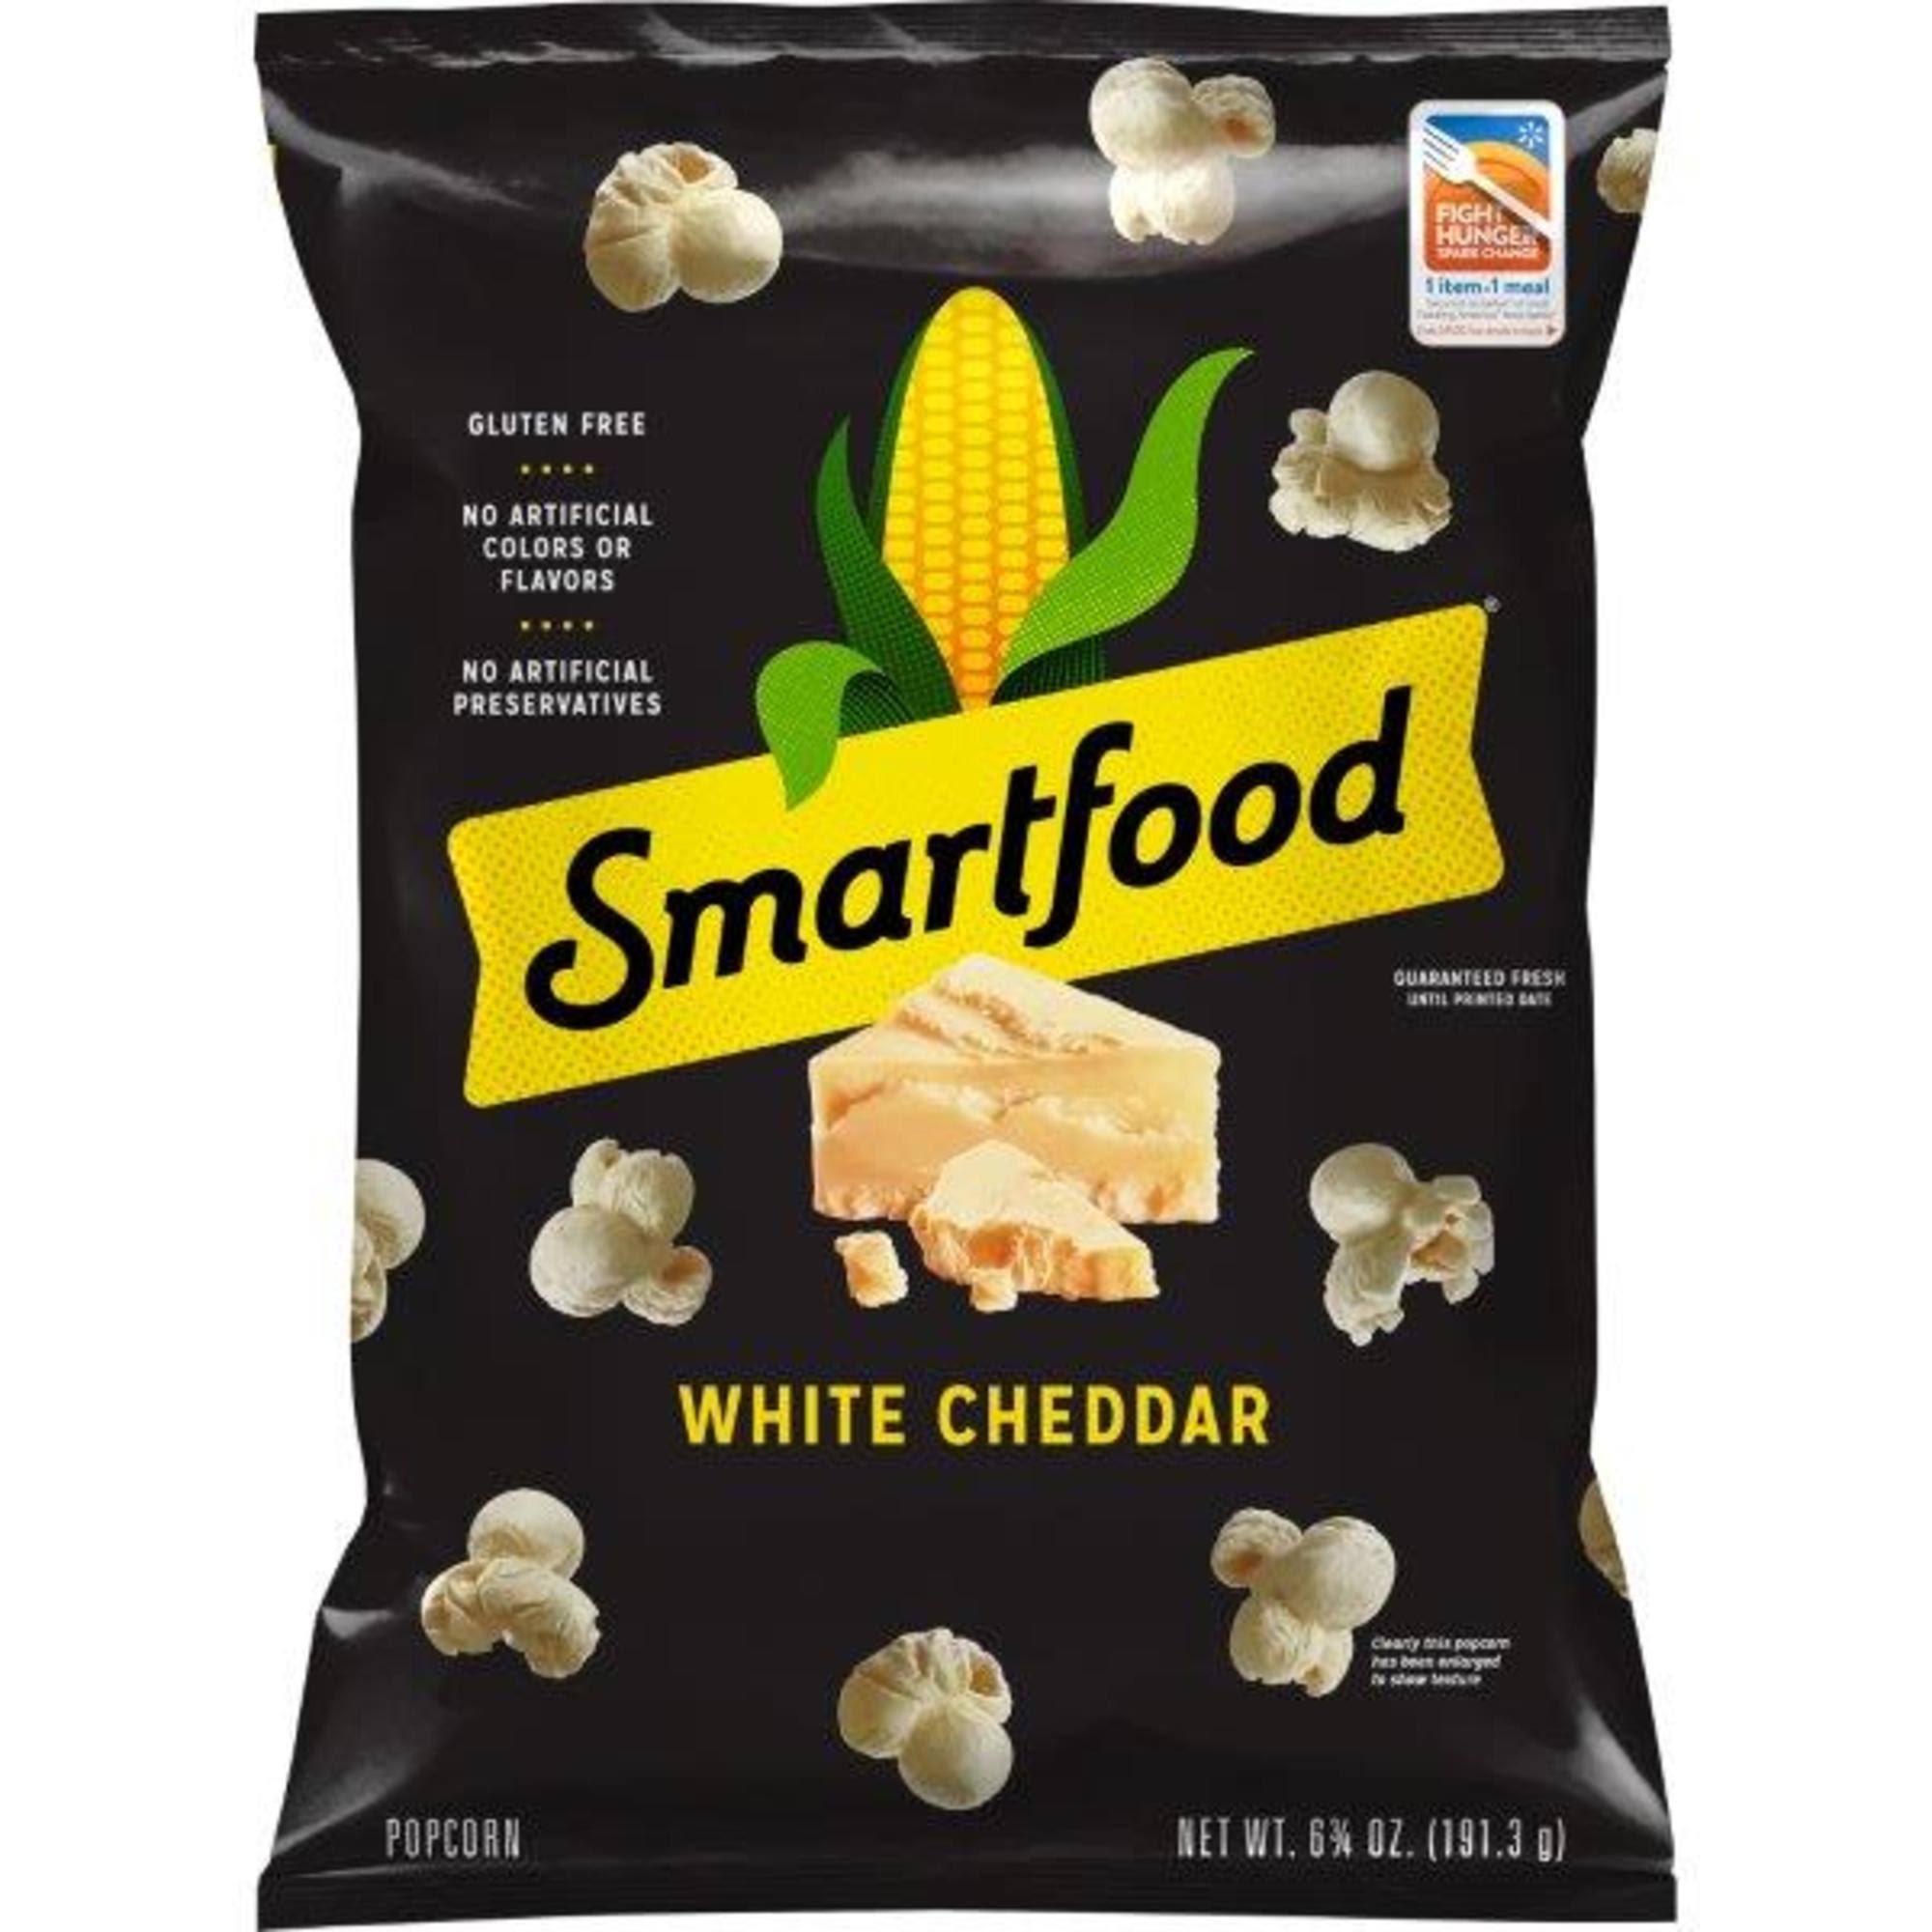 Smartfood White Cheddar XL, 6.75 oz